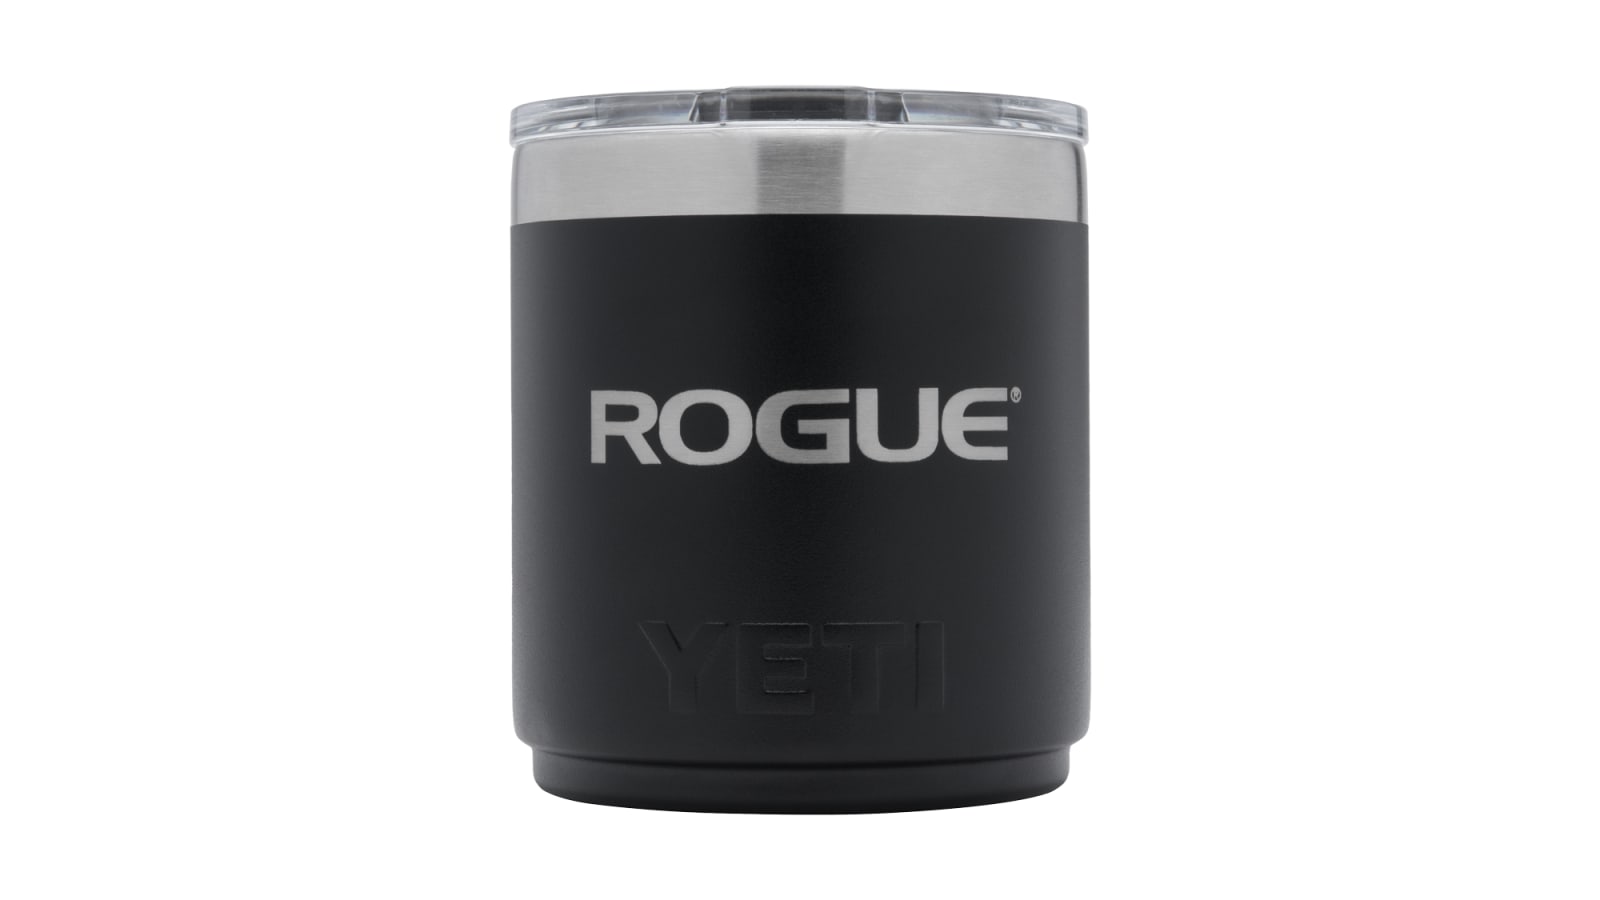 YETI Rambler 20 oz Black Stone BPA Free Vacuum Insulated Tumbler